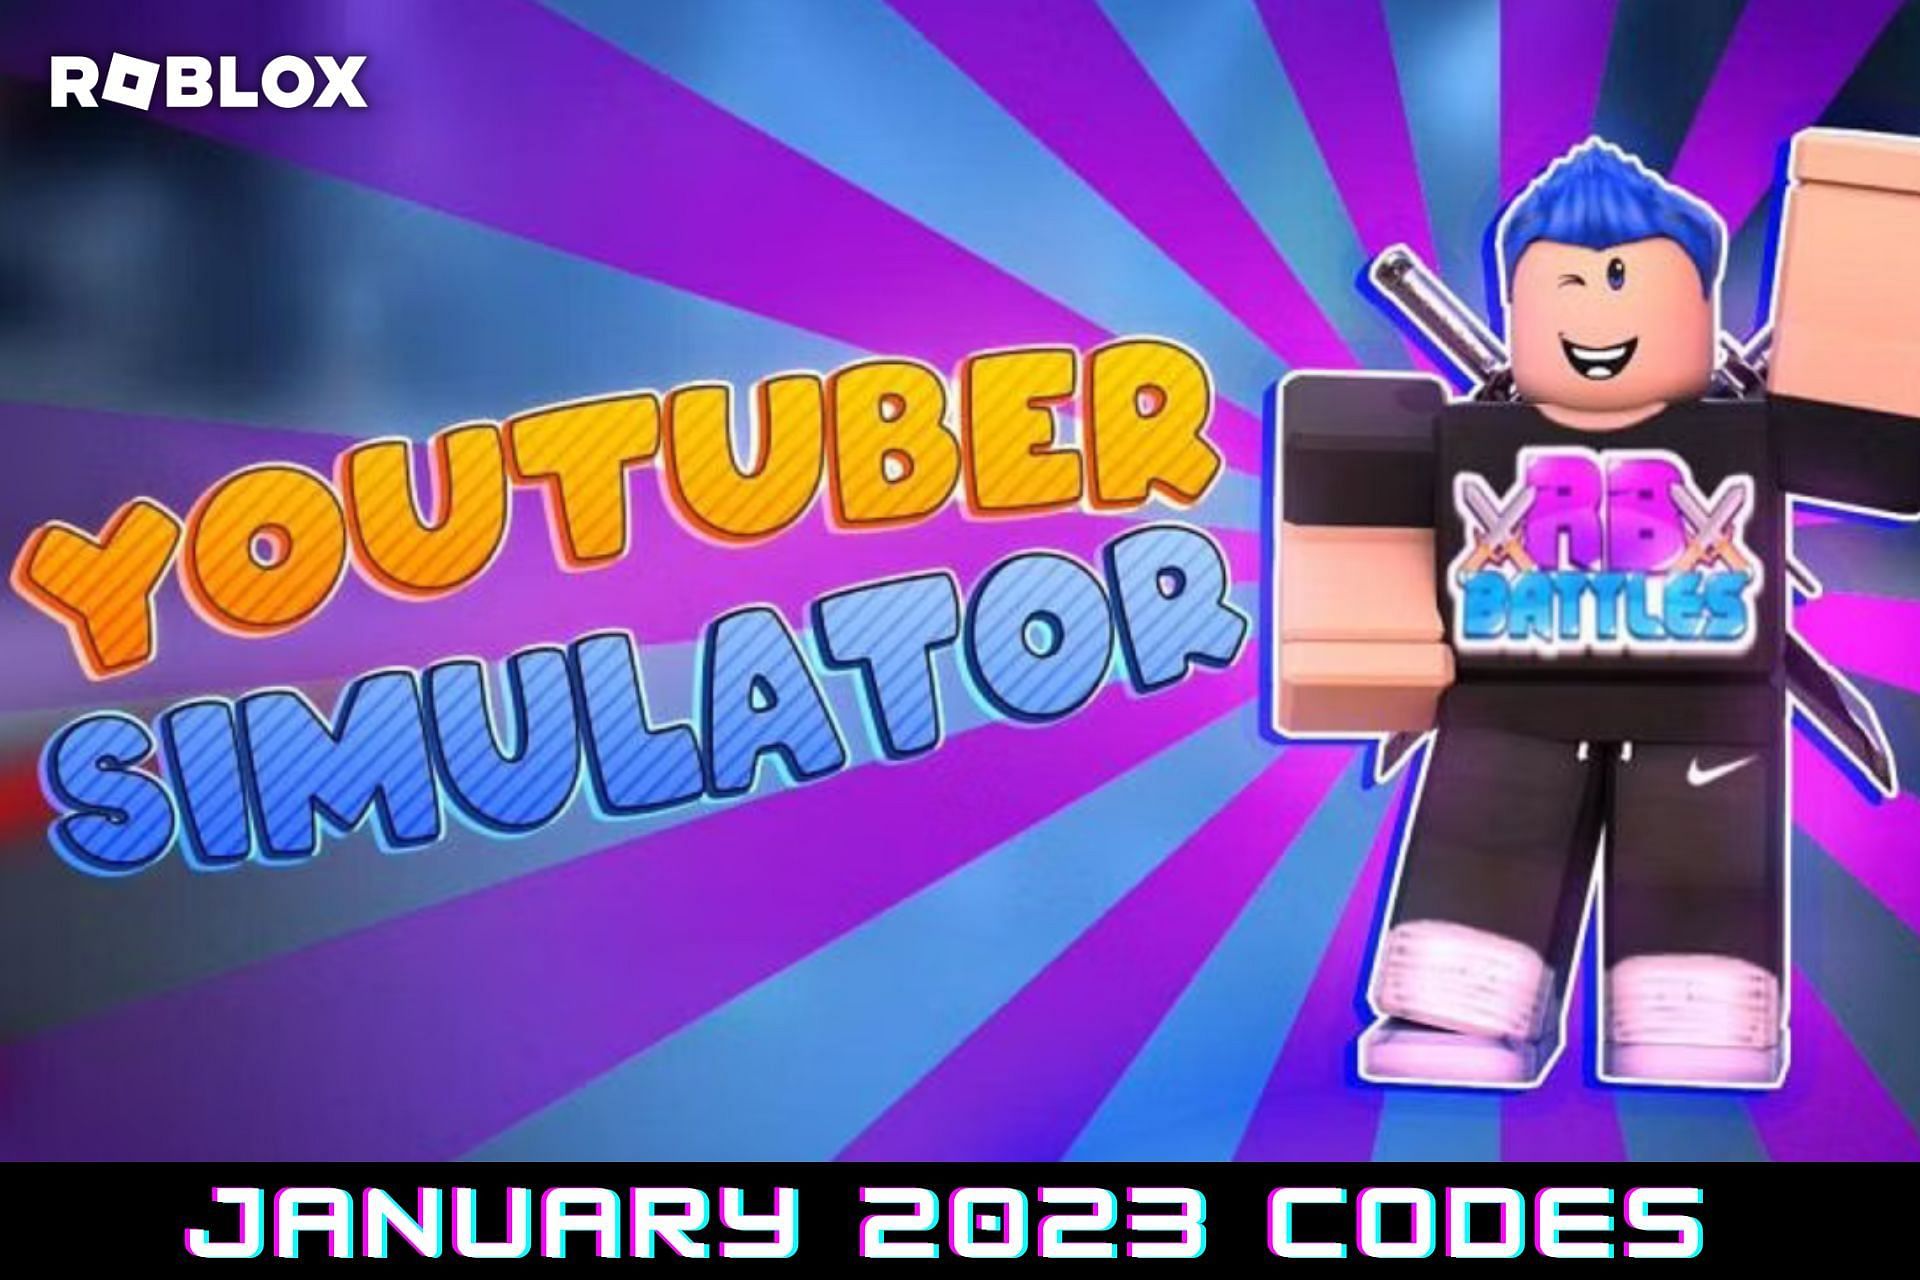 Roblox Youtube Simulator Codes 2023